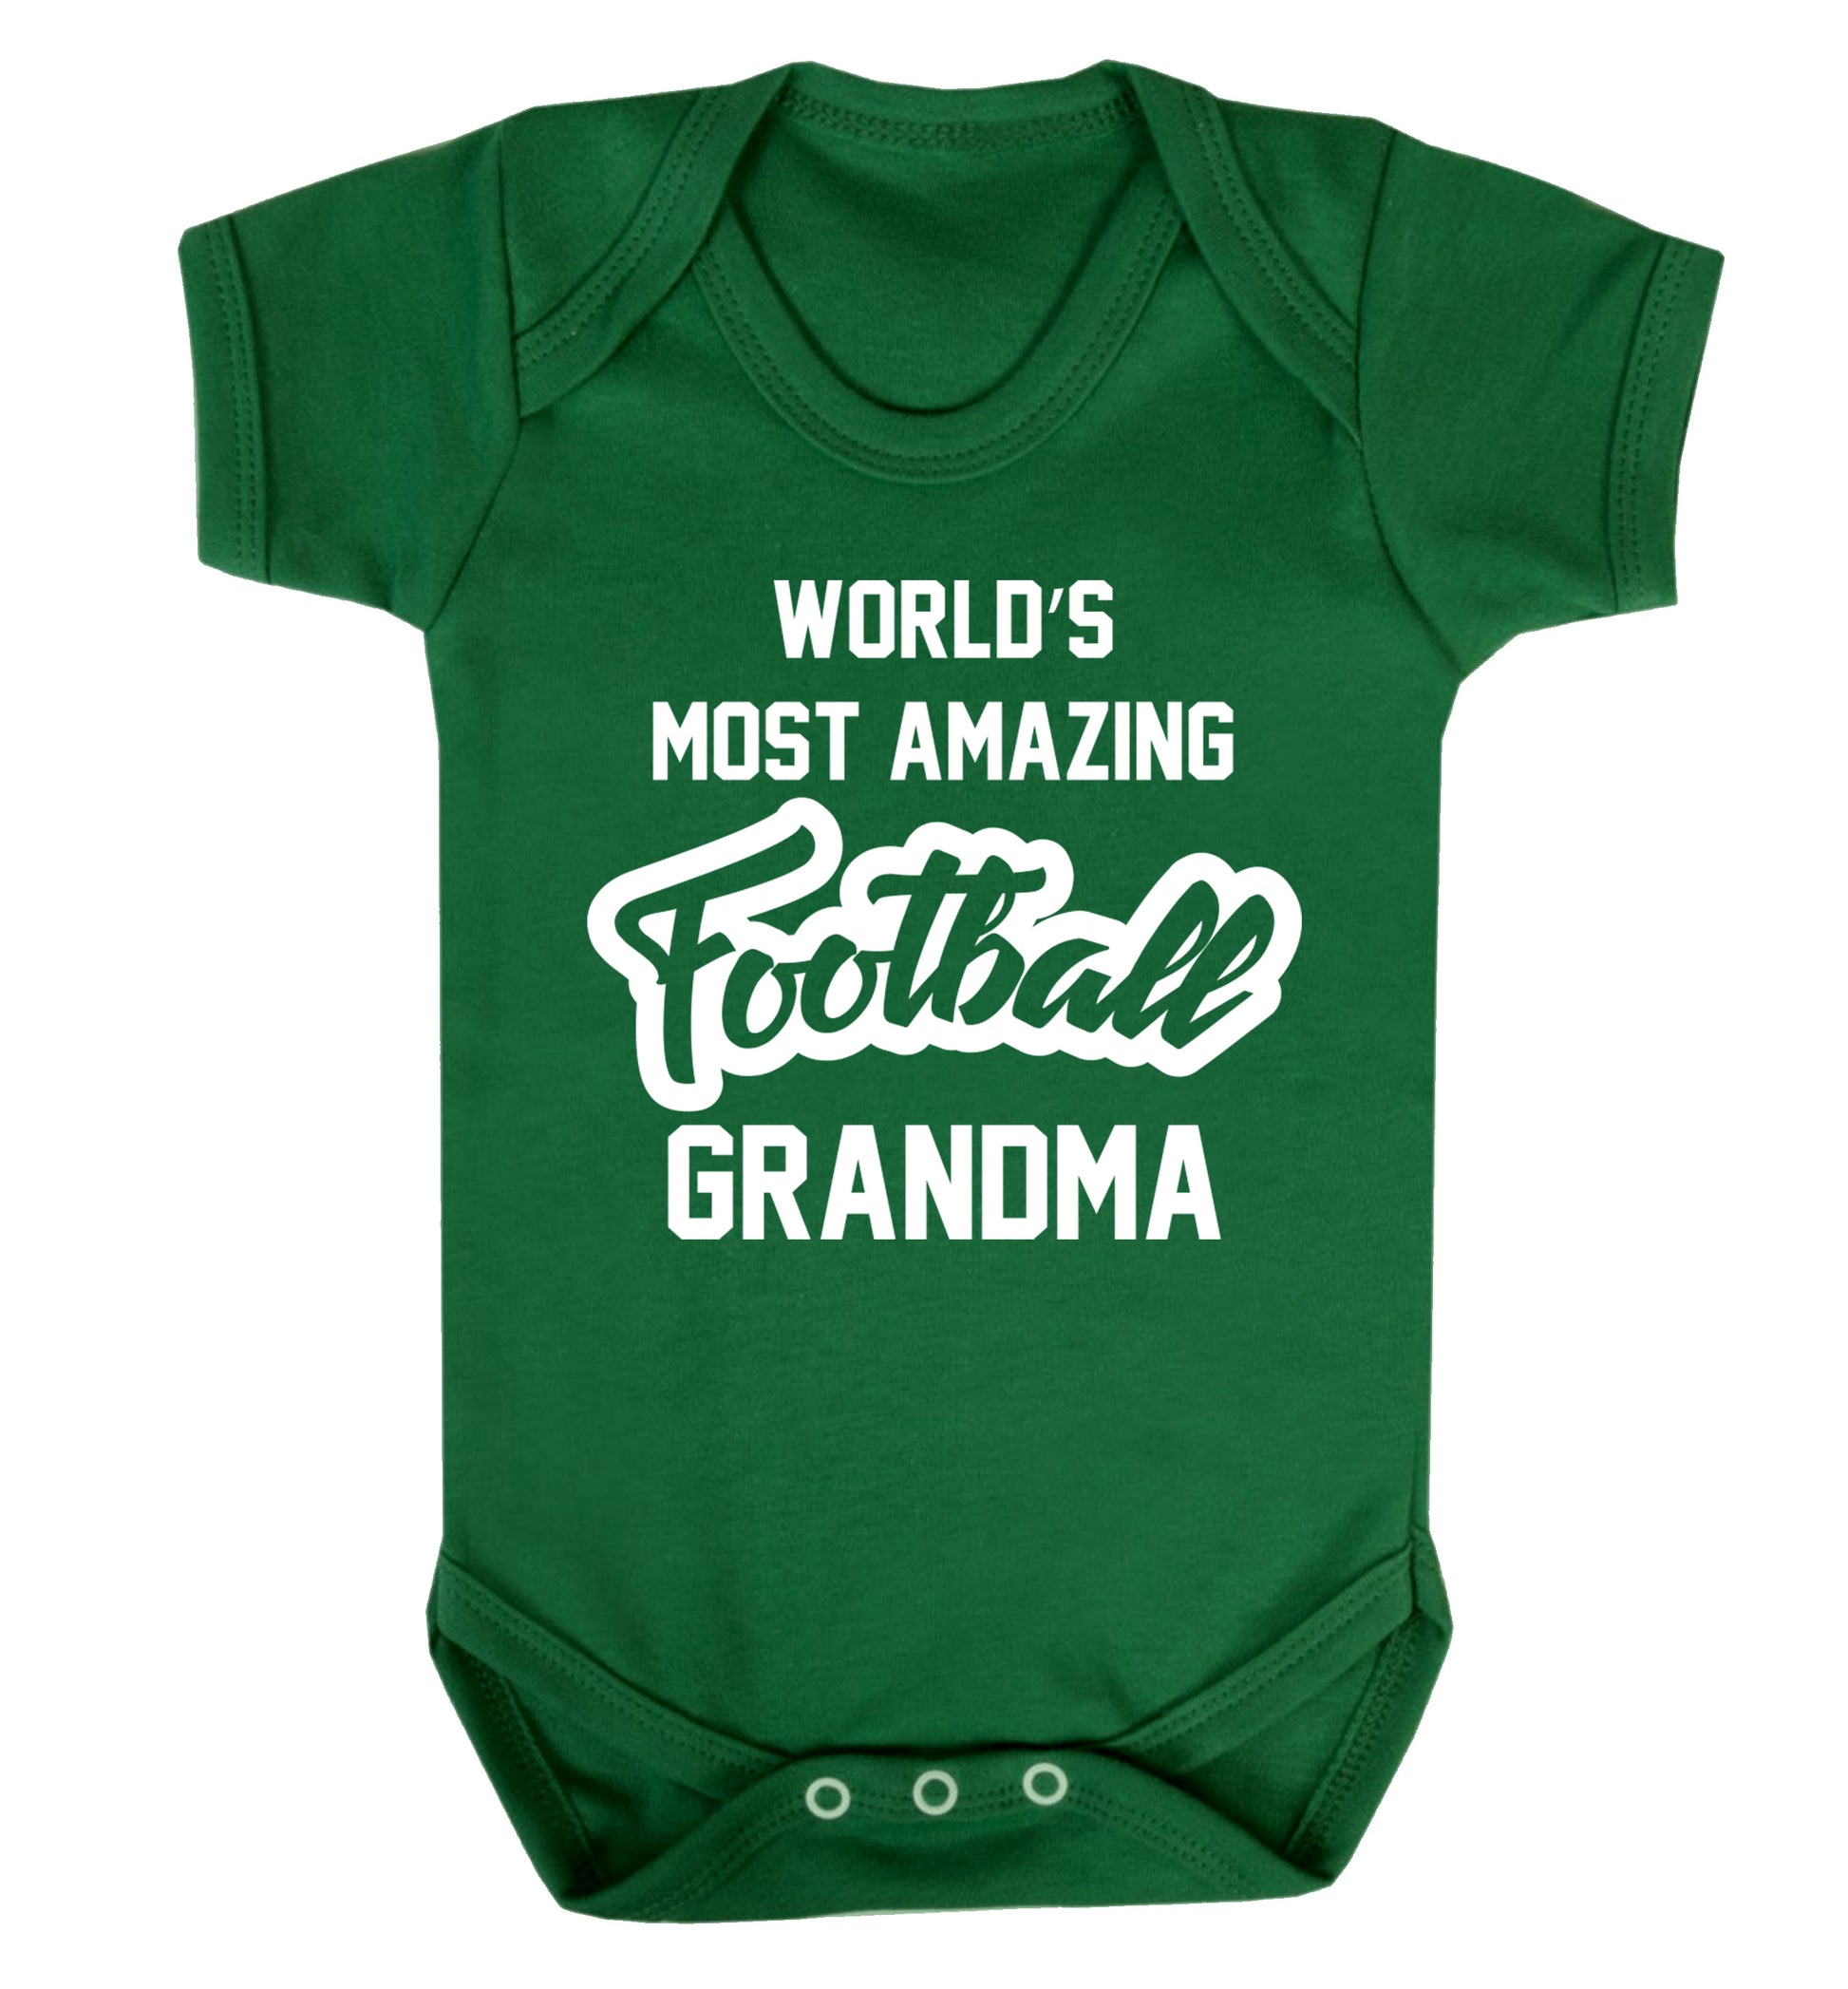 Worlds most amazing football grandma Baby Vest green 18-24 months